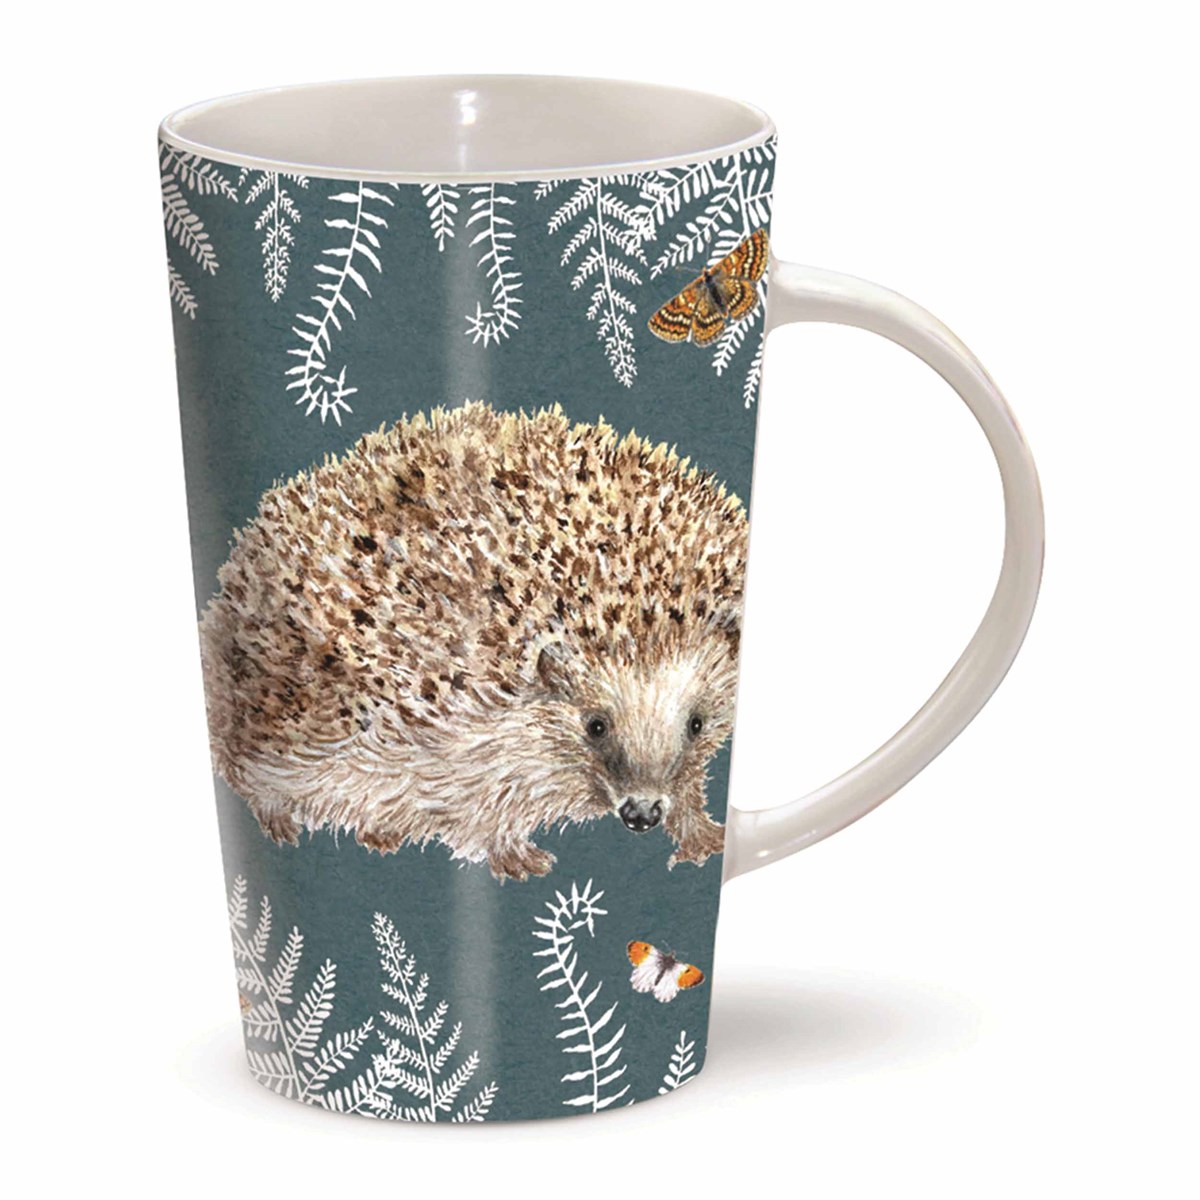 RSPB, The Riverbank In the Wild Hedgehog & Ferns Mug